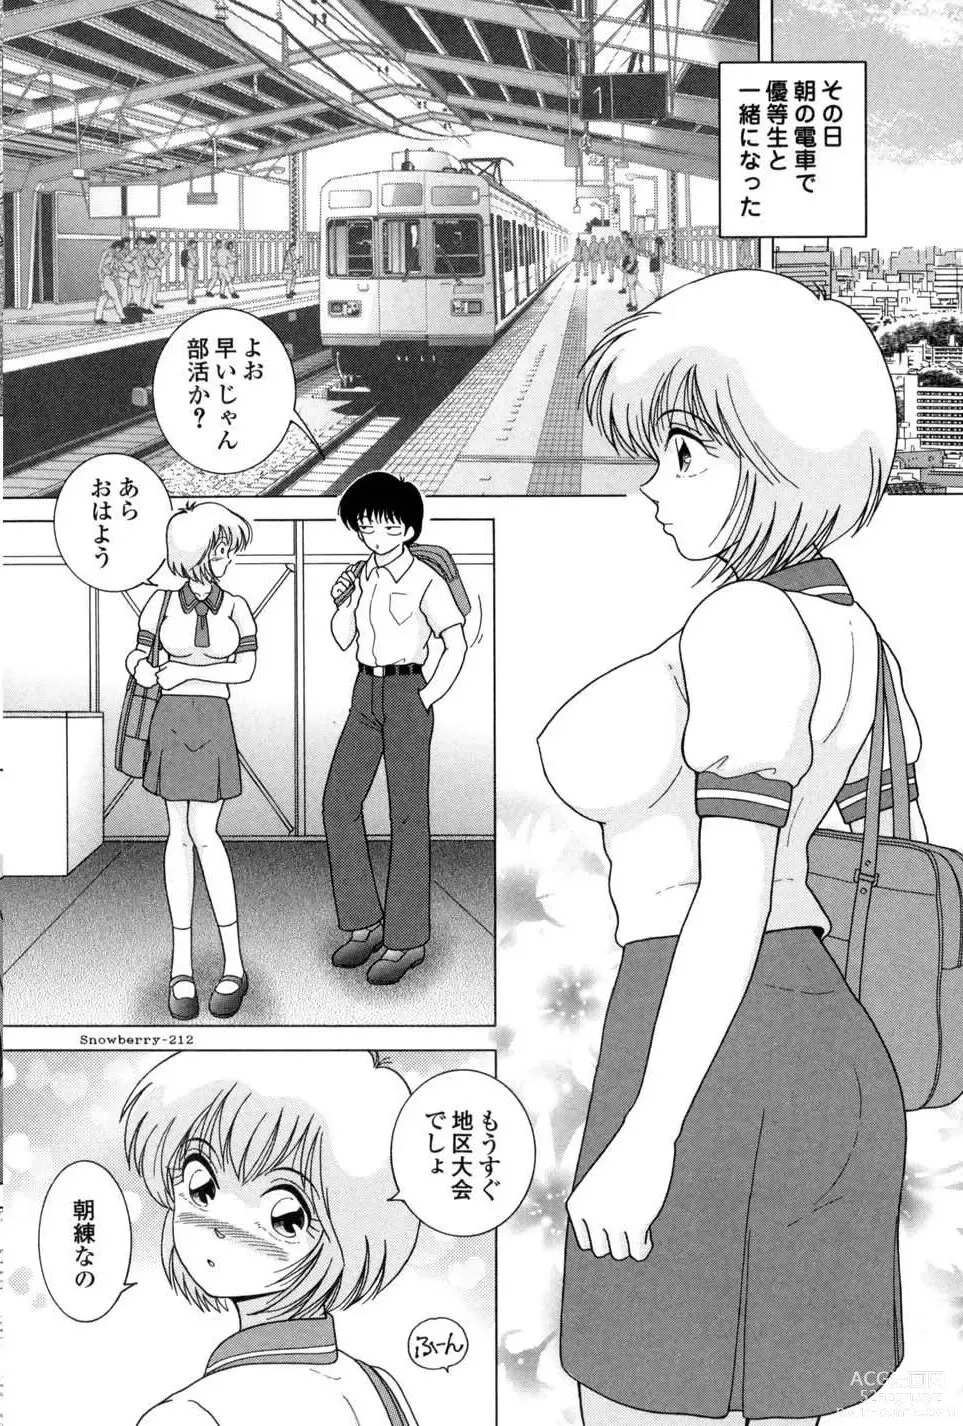 Page 2 of manga Jogakusei Maetsu no Kyoukasho - The Schoolgirl With Shameful Textbook